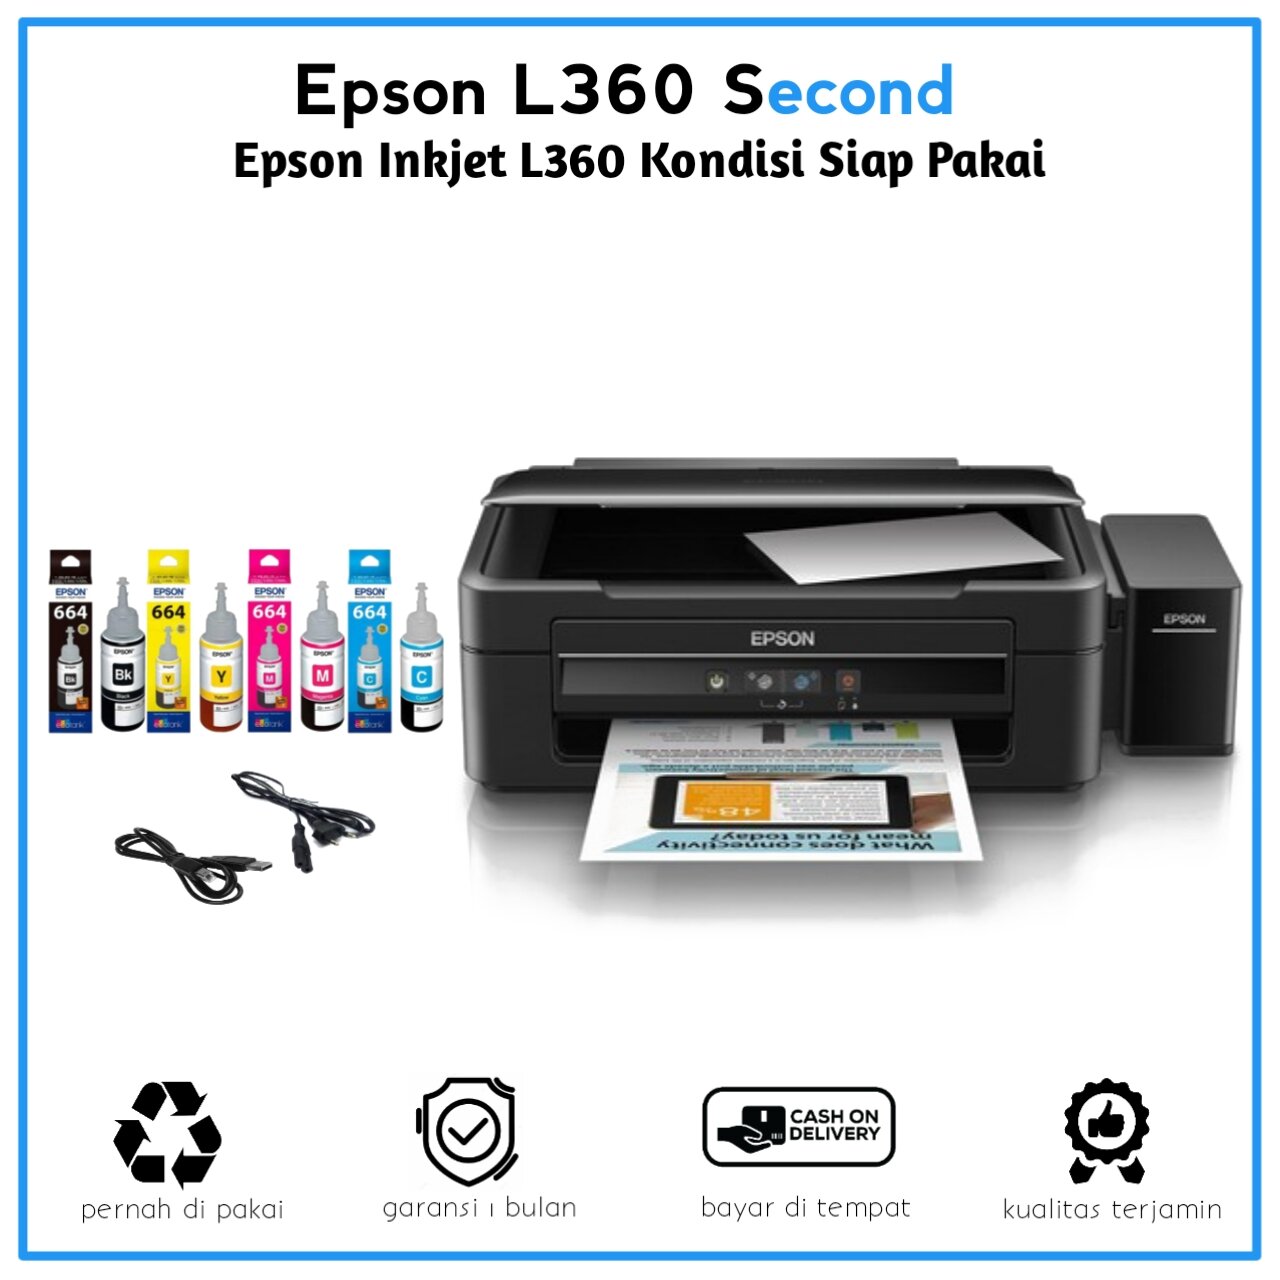 Printer Epson L360 Scancopyprint Lazada Indonesia 4507